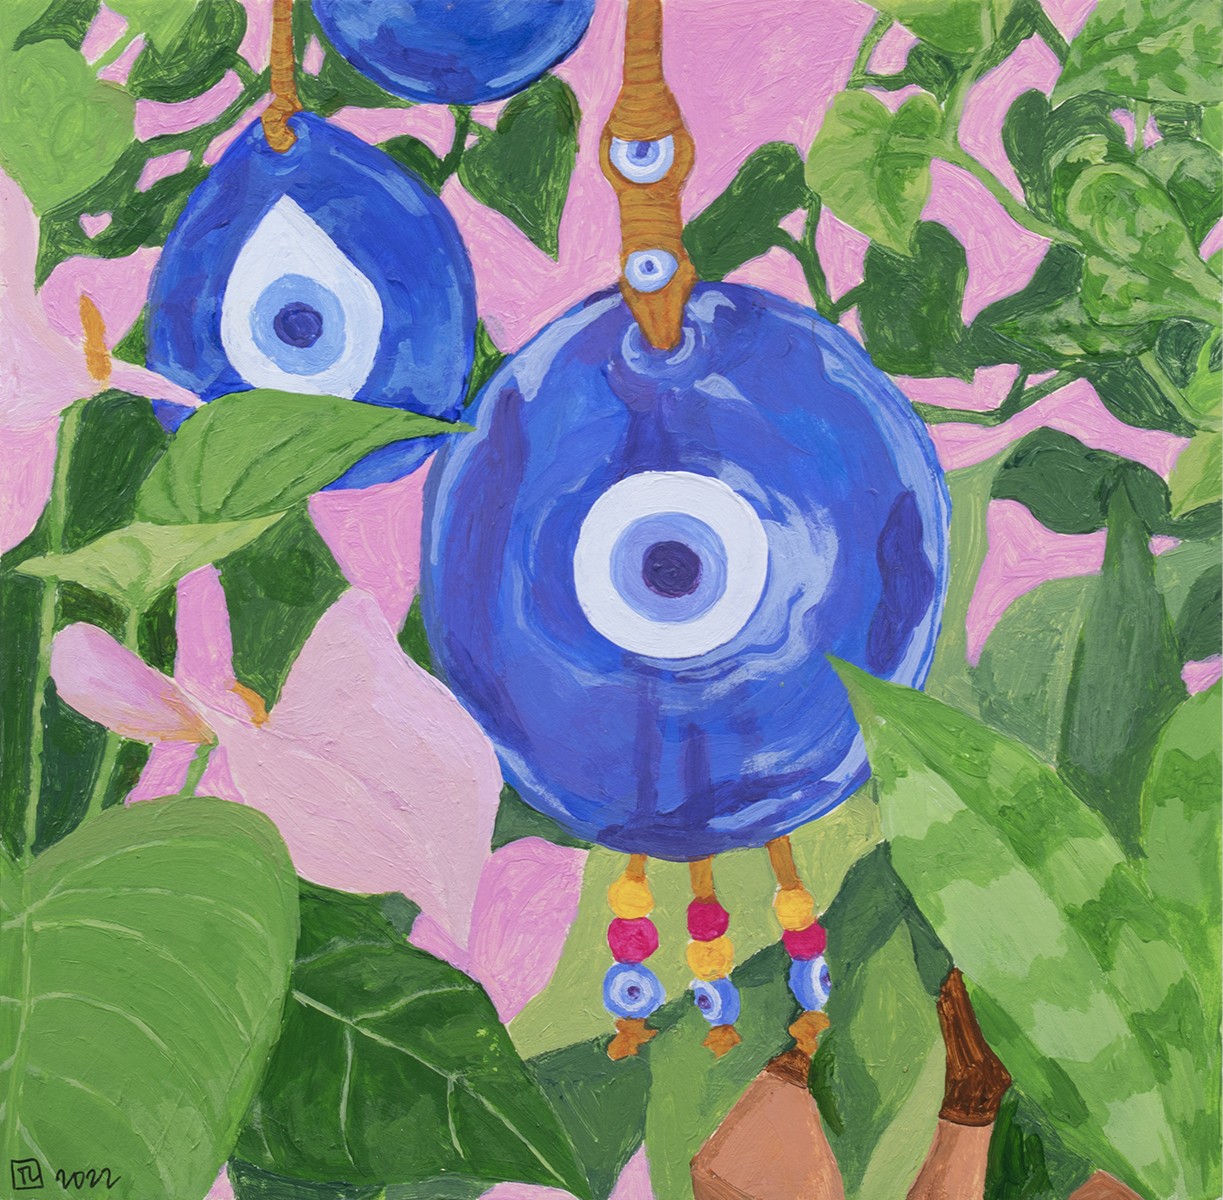 Evil eye charm with plants